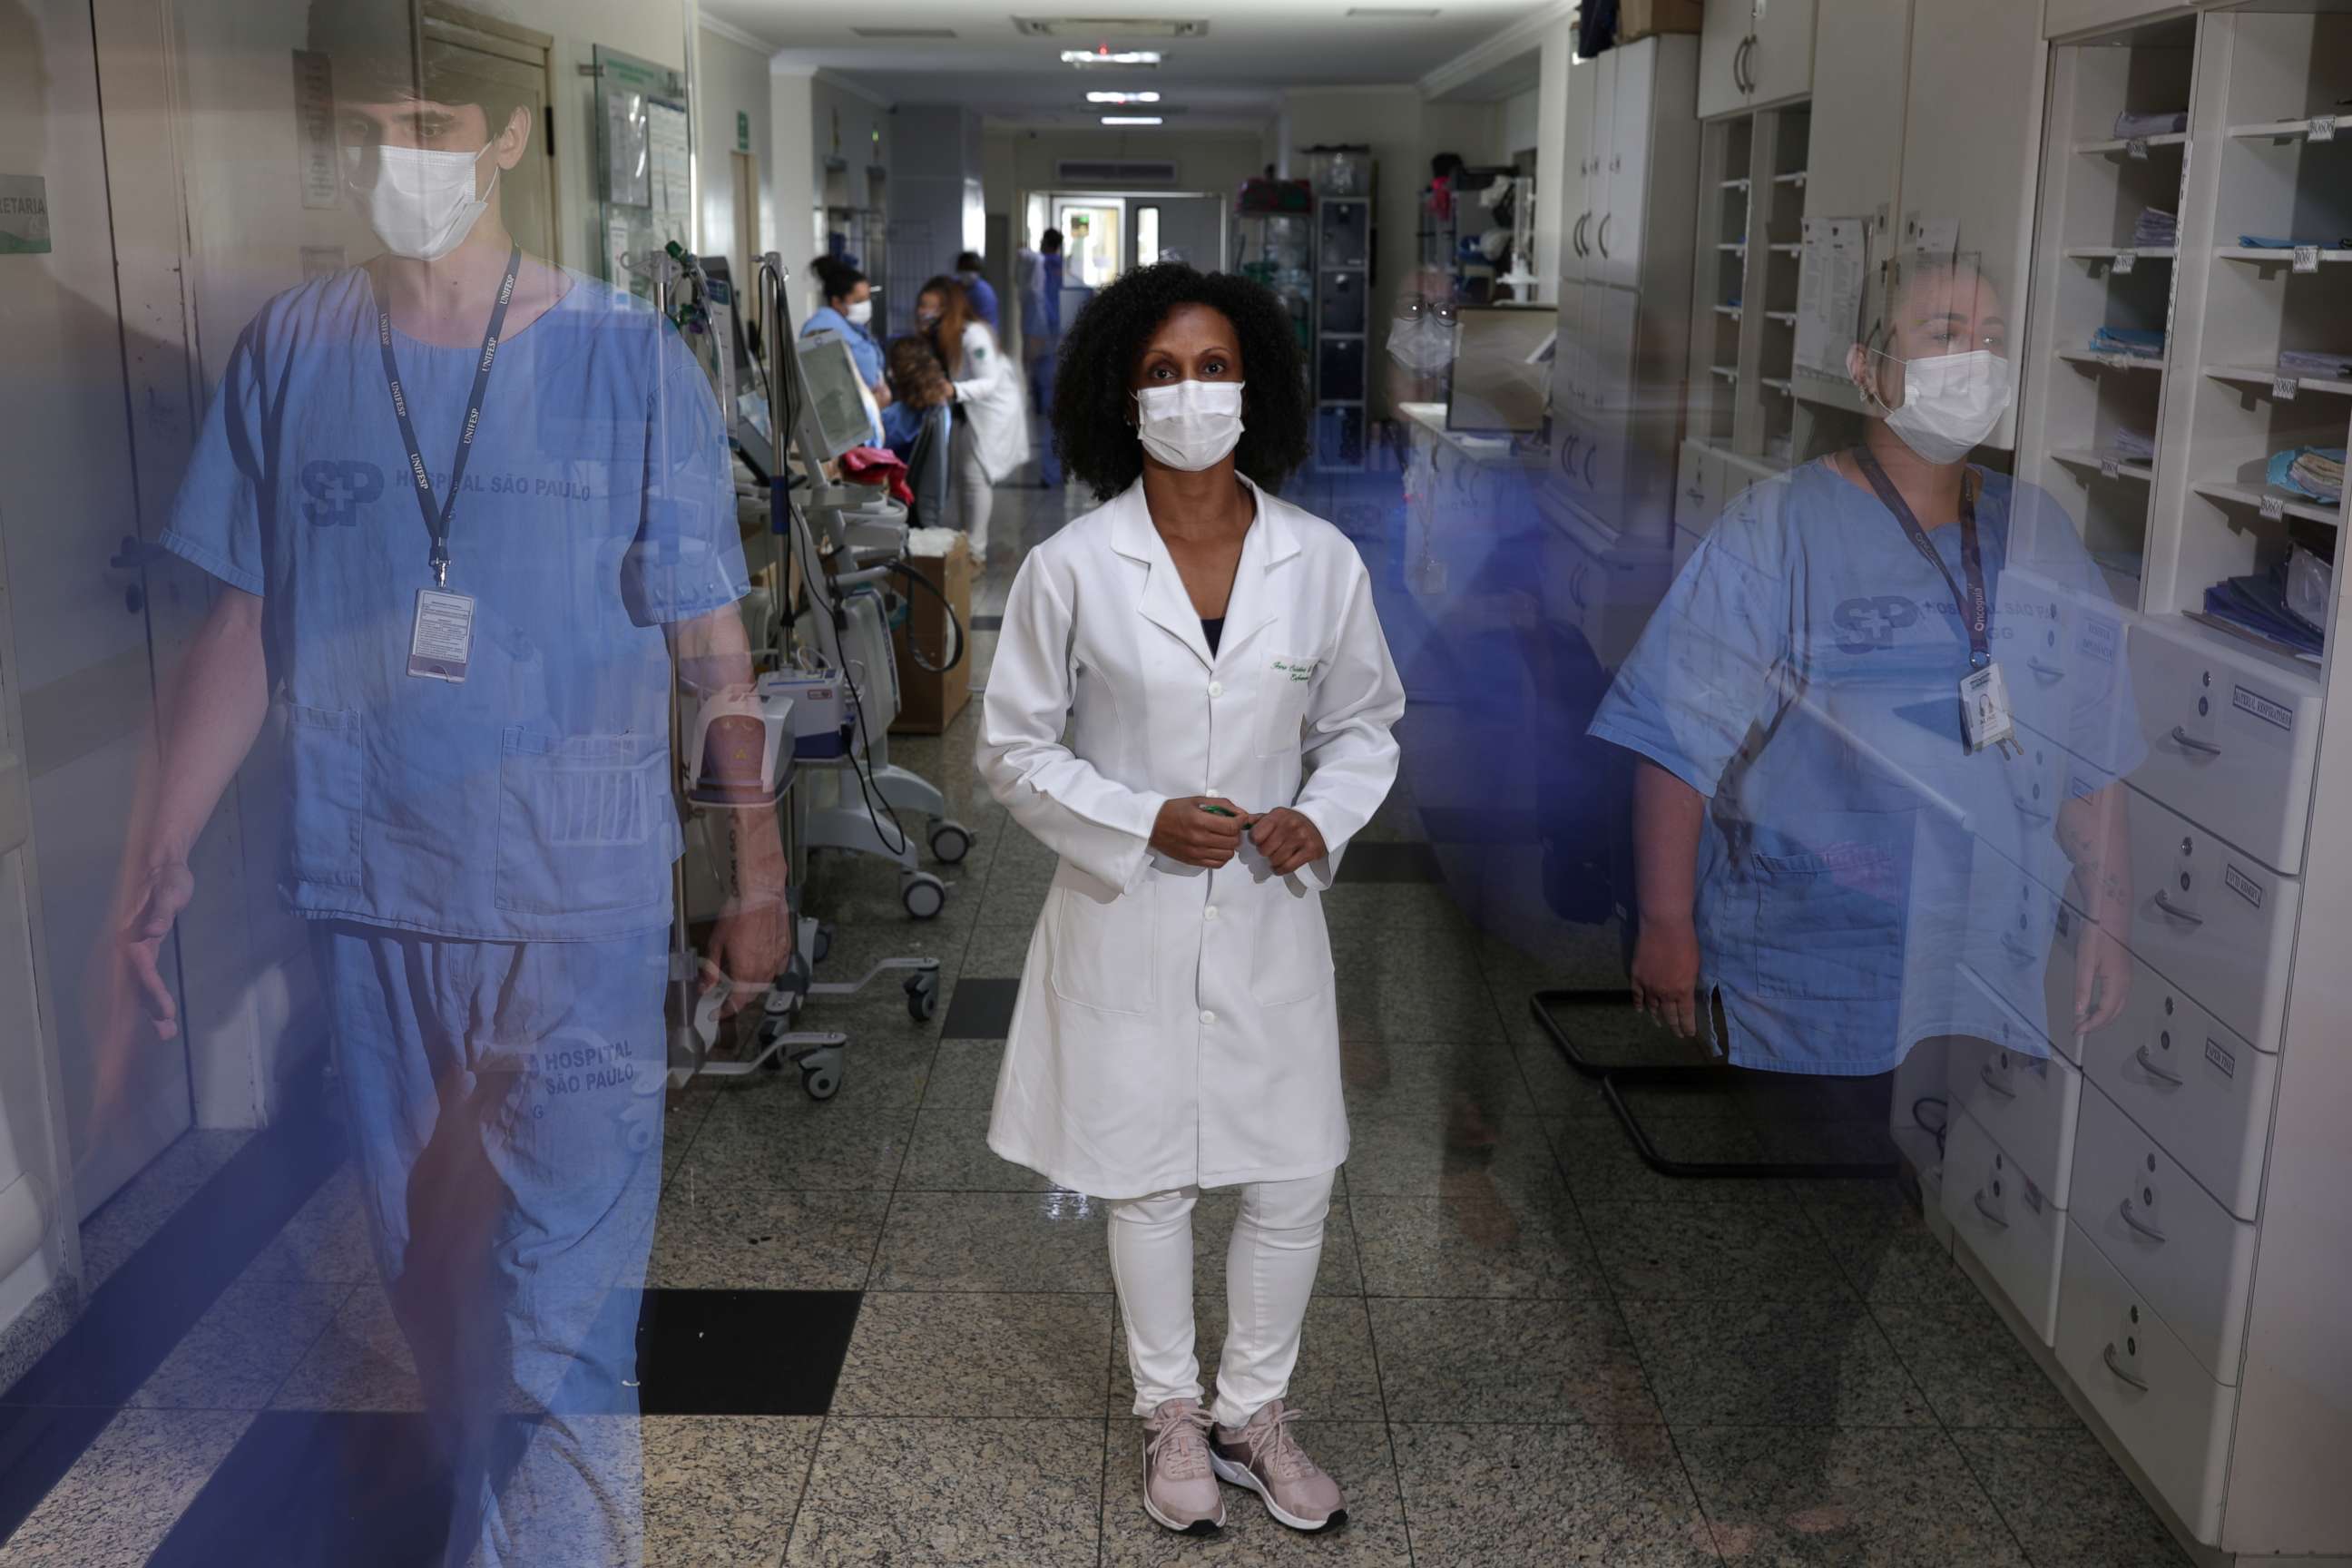 PHOTO: Jane Cristina Dias Alves, 43, a nurse volunteer in a COVID-19 vaccine trial for AstraZeneca, poses for a photograph in Sao Paulo, Brazil, Dec. 11, 2020.